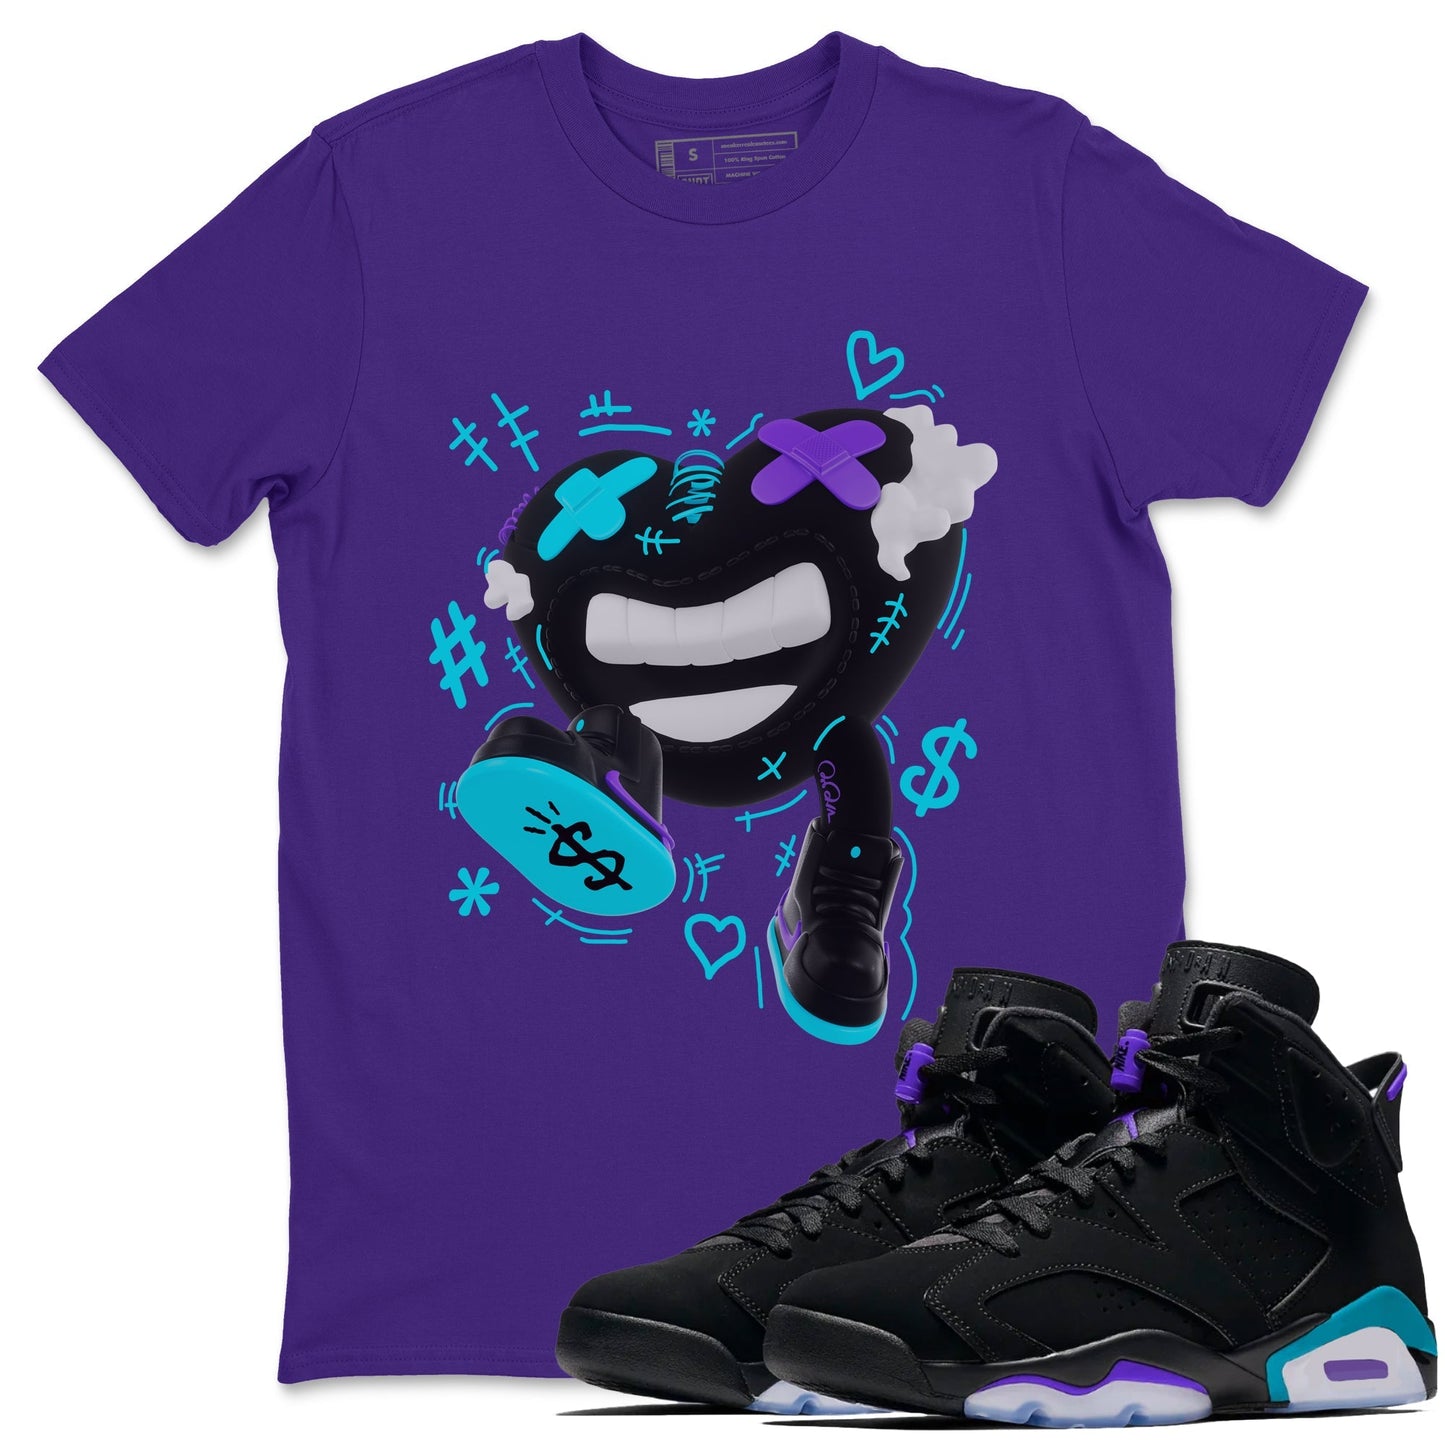 Air Jordan 6 Aqua shirt to match jordans Walk In Love Streetwear Sneaker Shirt AJ6 Aqua Drip Gear Zone Sneaker Matching Clothing Unisex Purple 1 T-Shirt